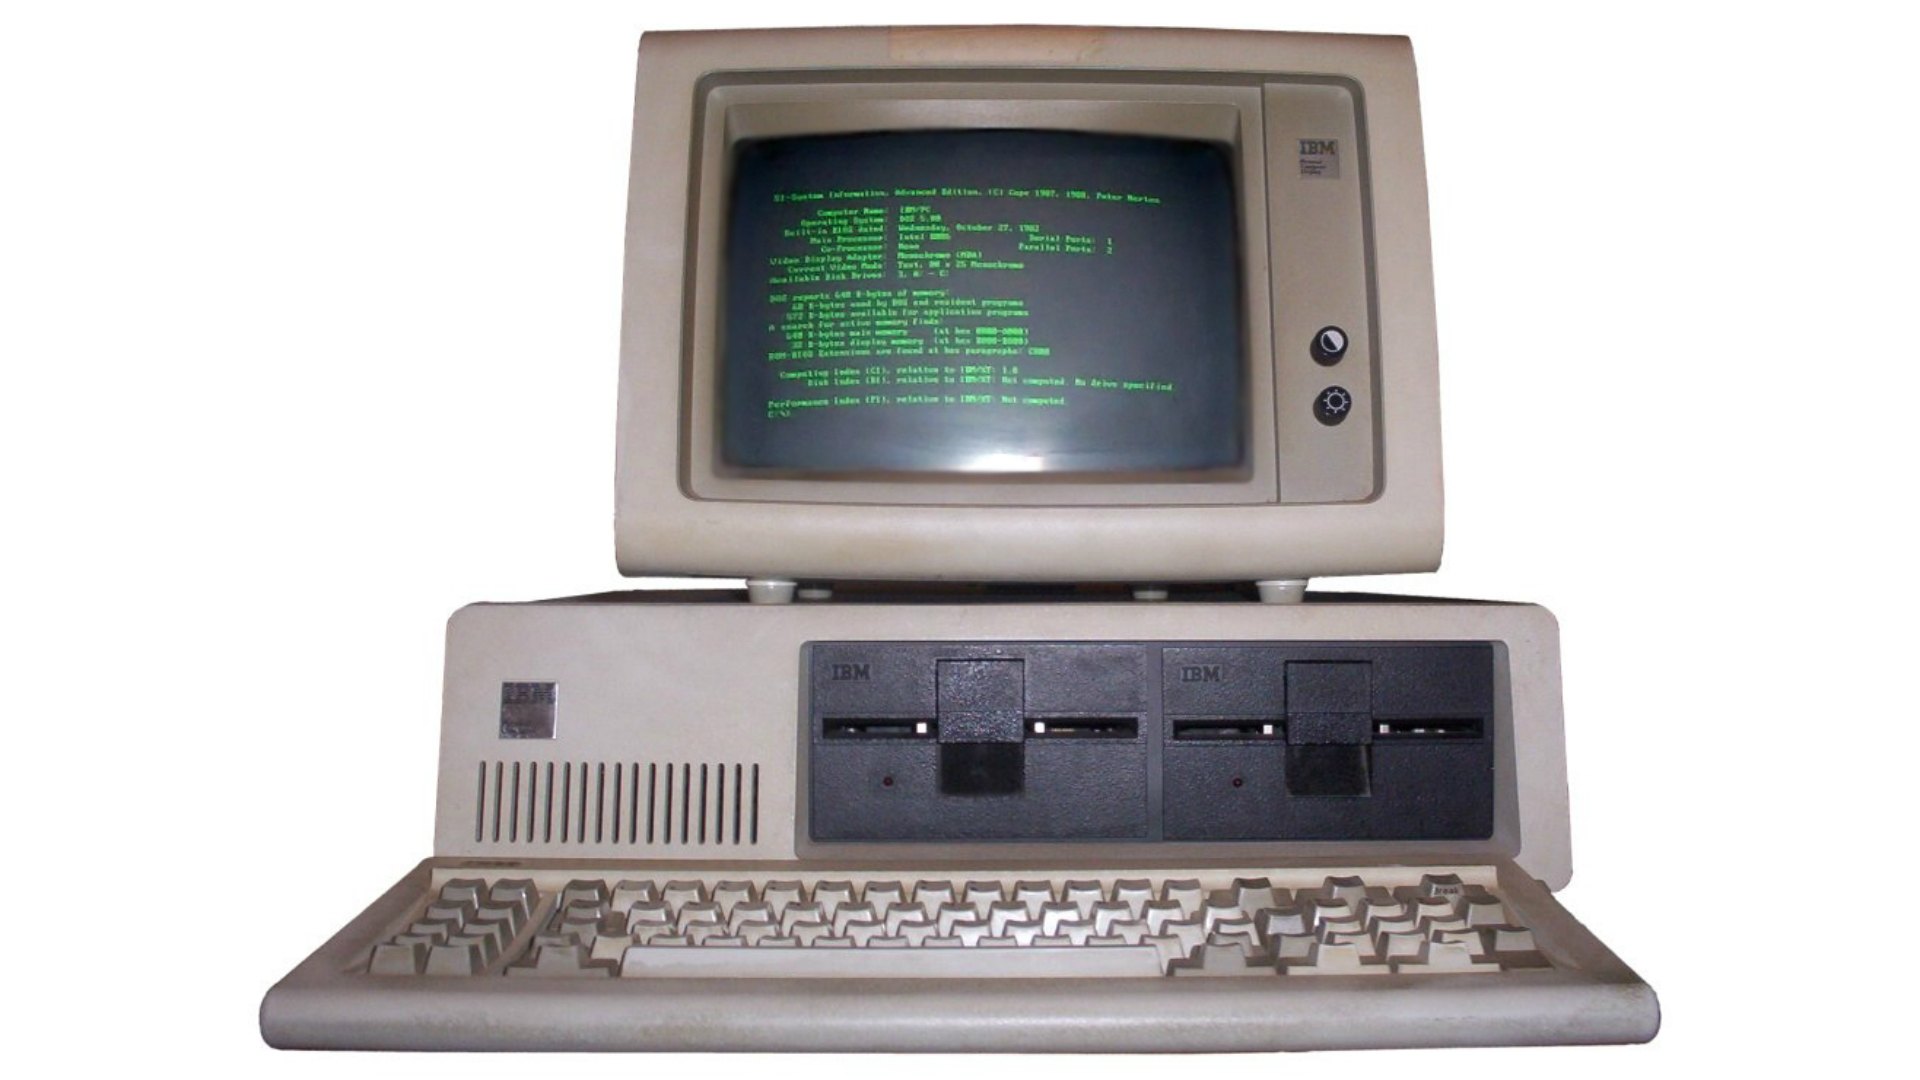 IBM PC 5150 Monochrome screen